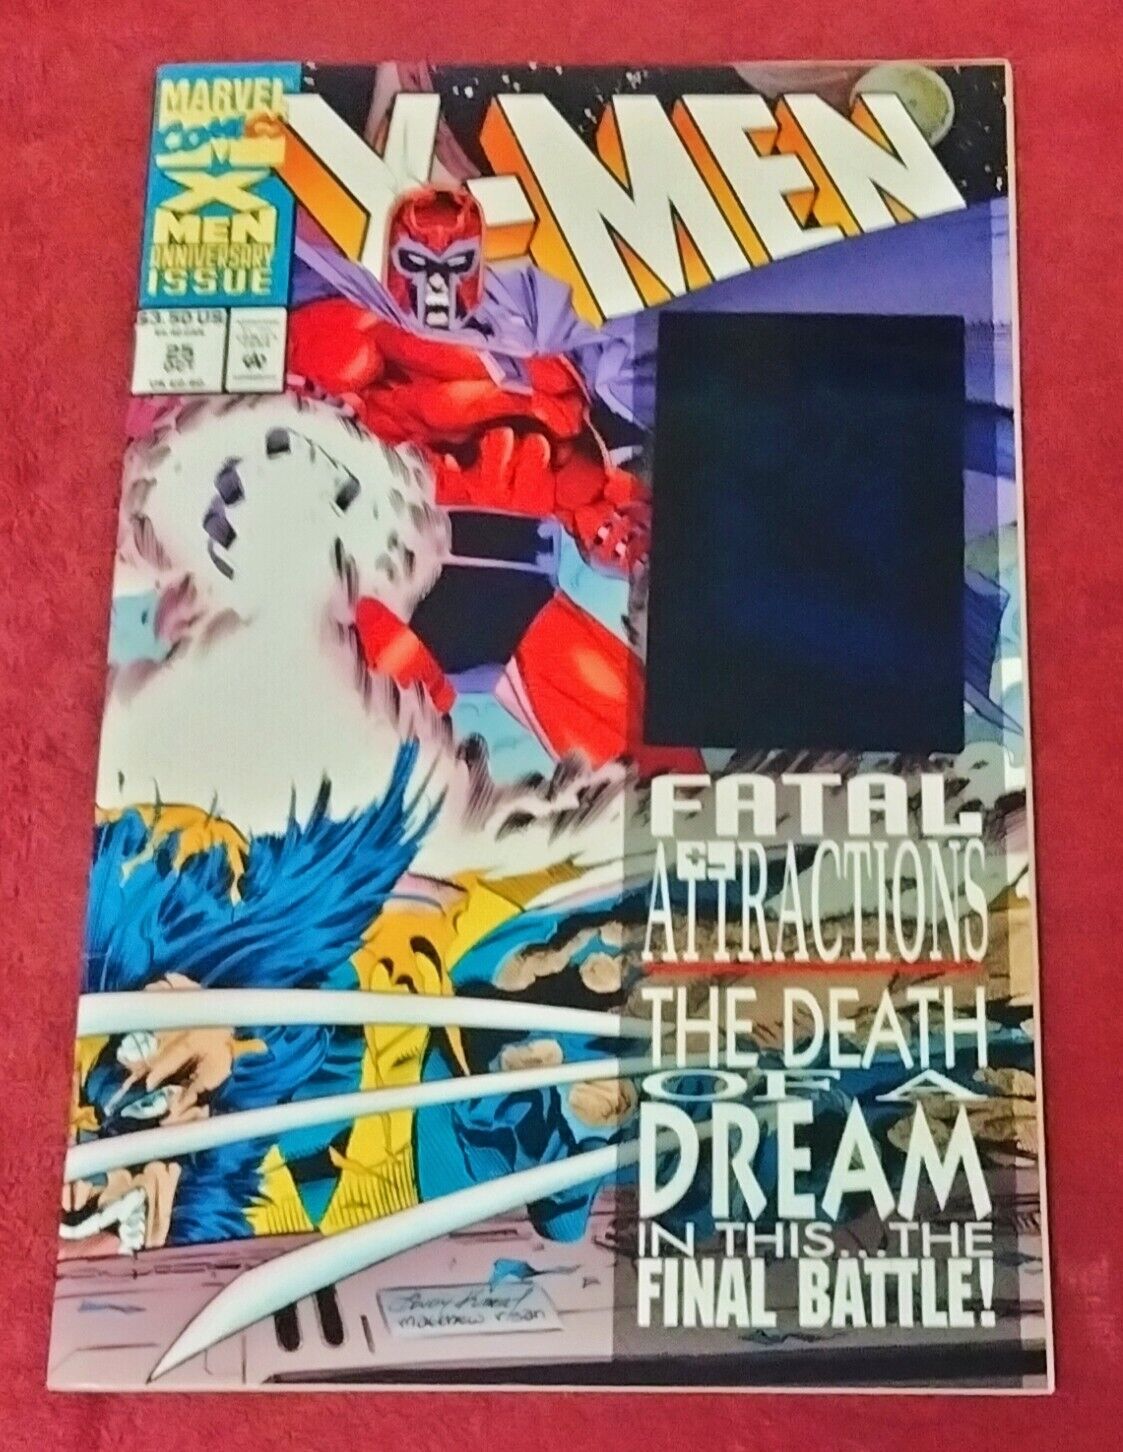 X-MEN #25 / 1993 / Magneto Removes Adamantium from Wolverine / 9.4 or Better